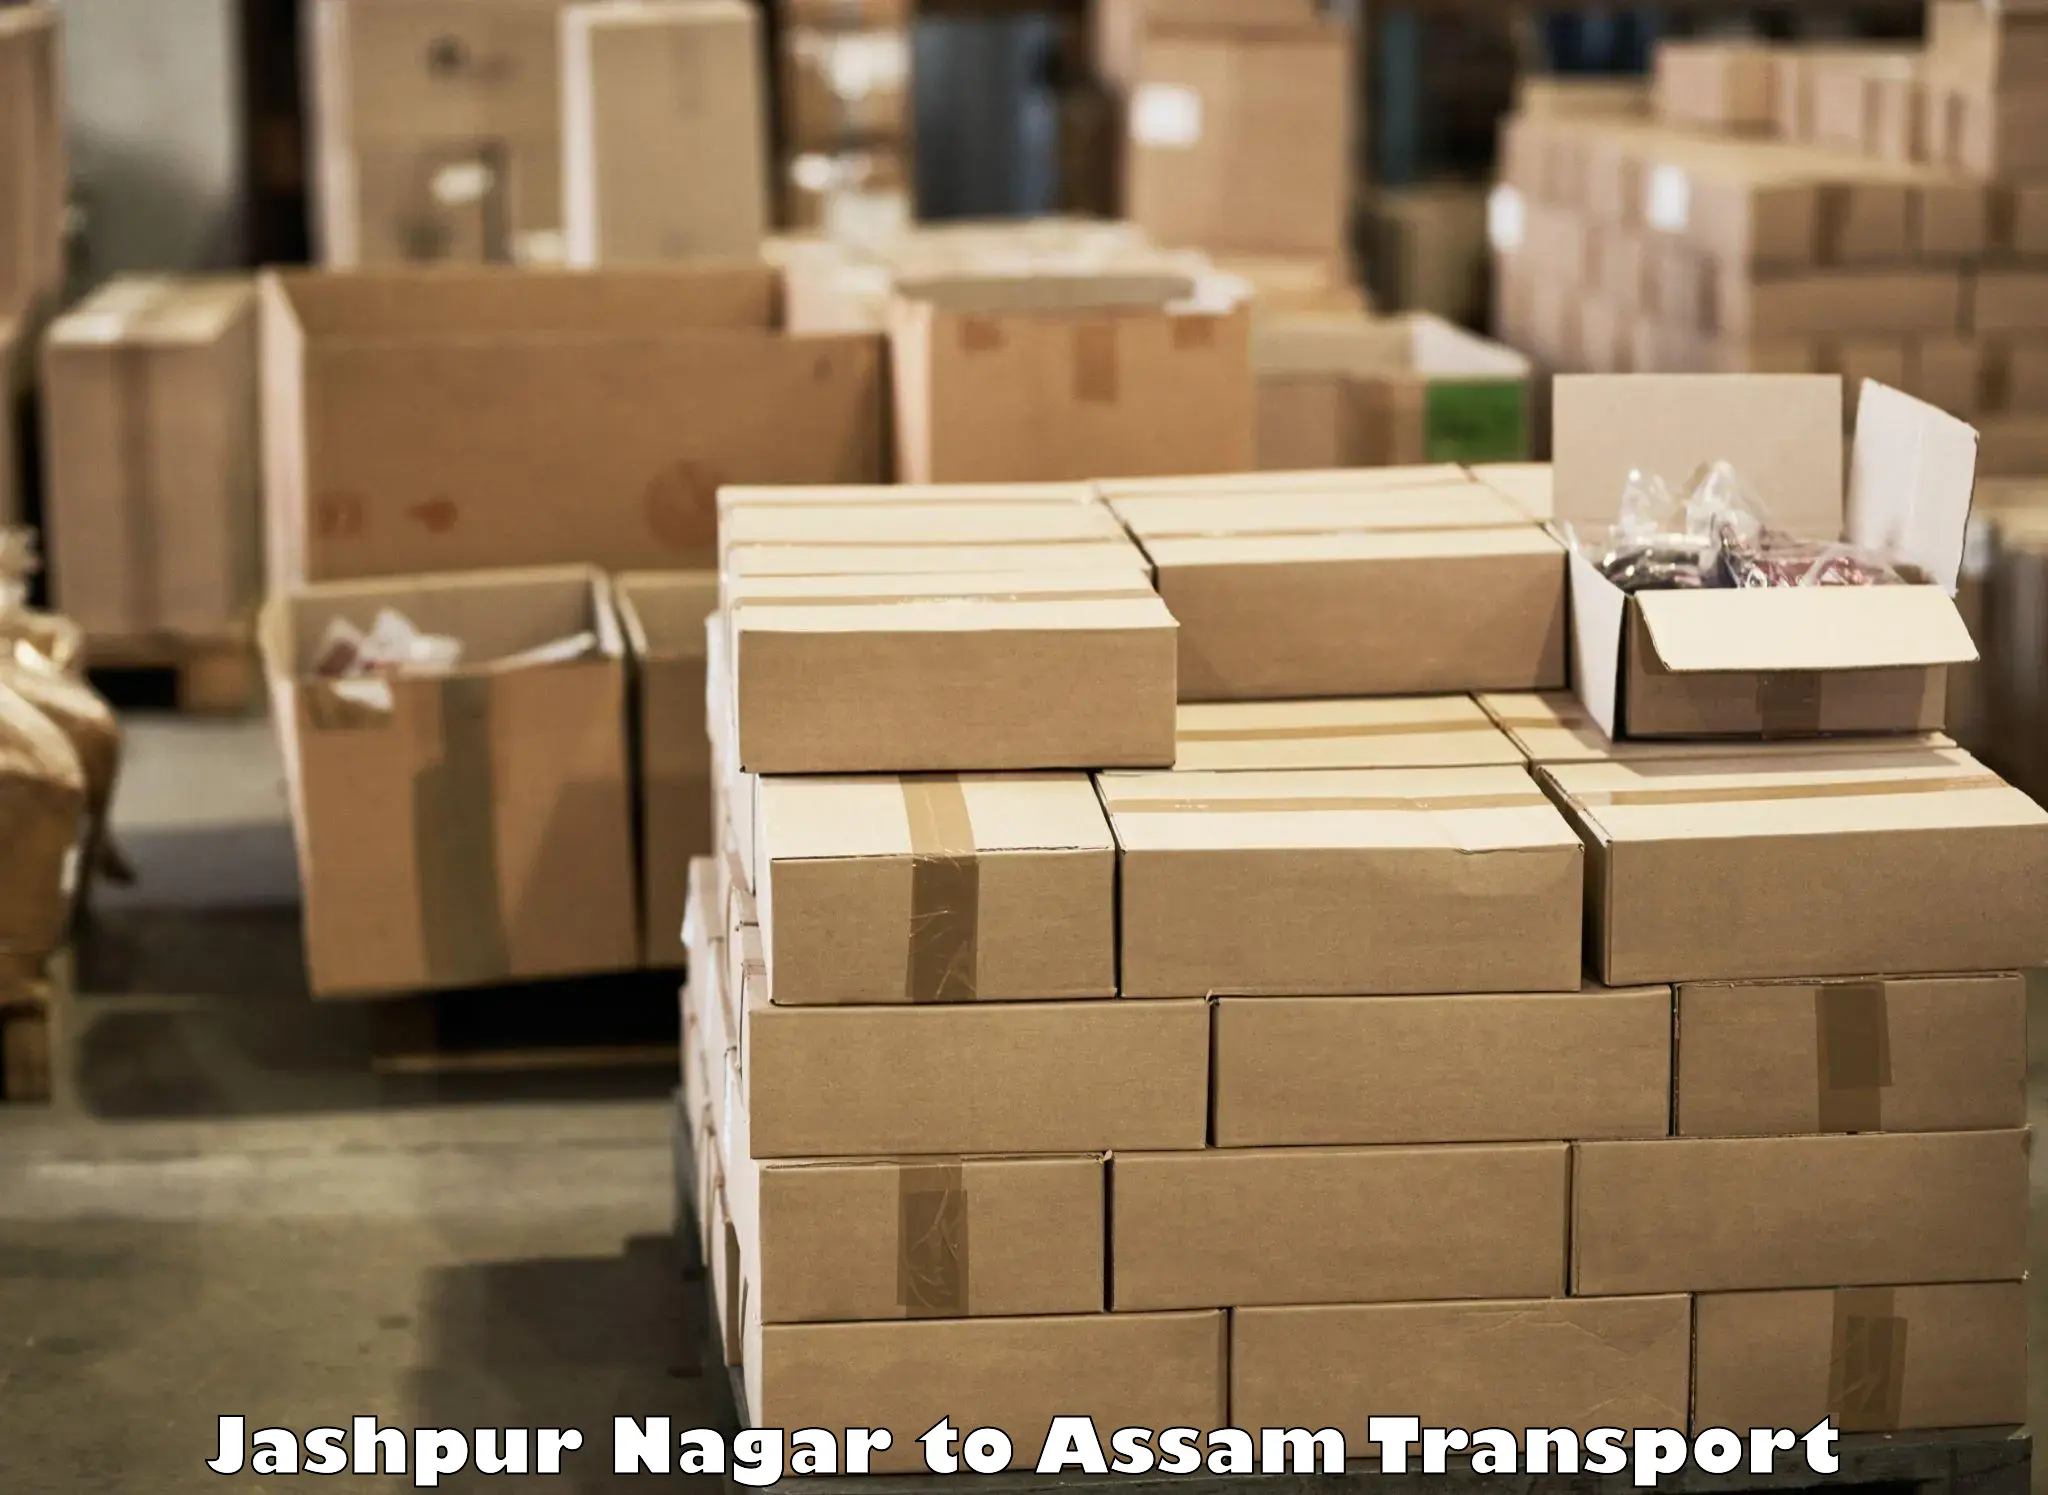 Truck transport companies in India Jashpur Nagar to Agomani